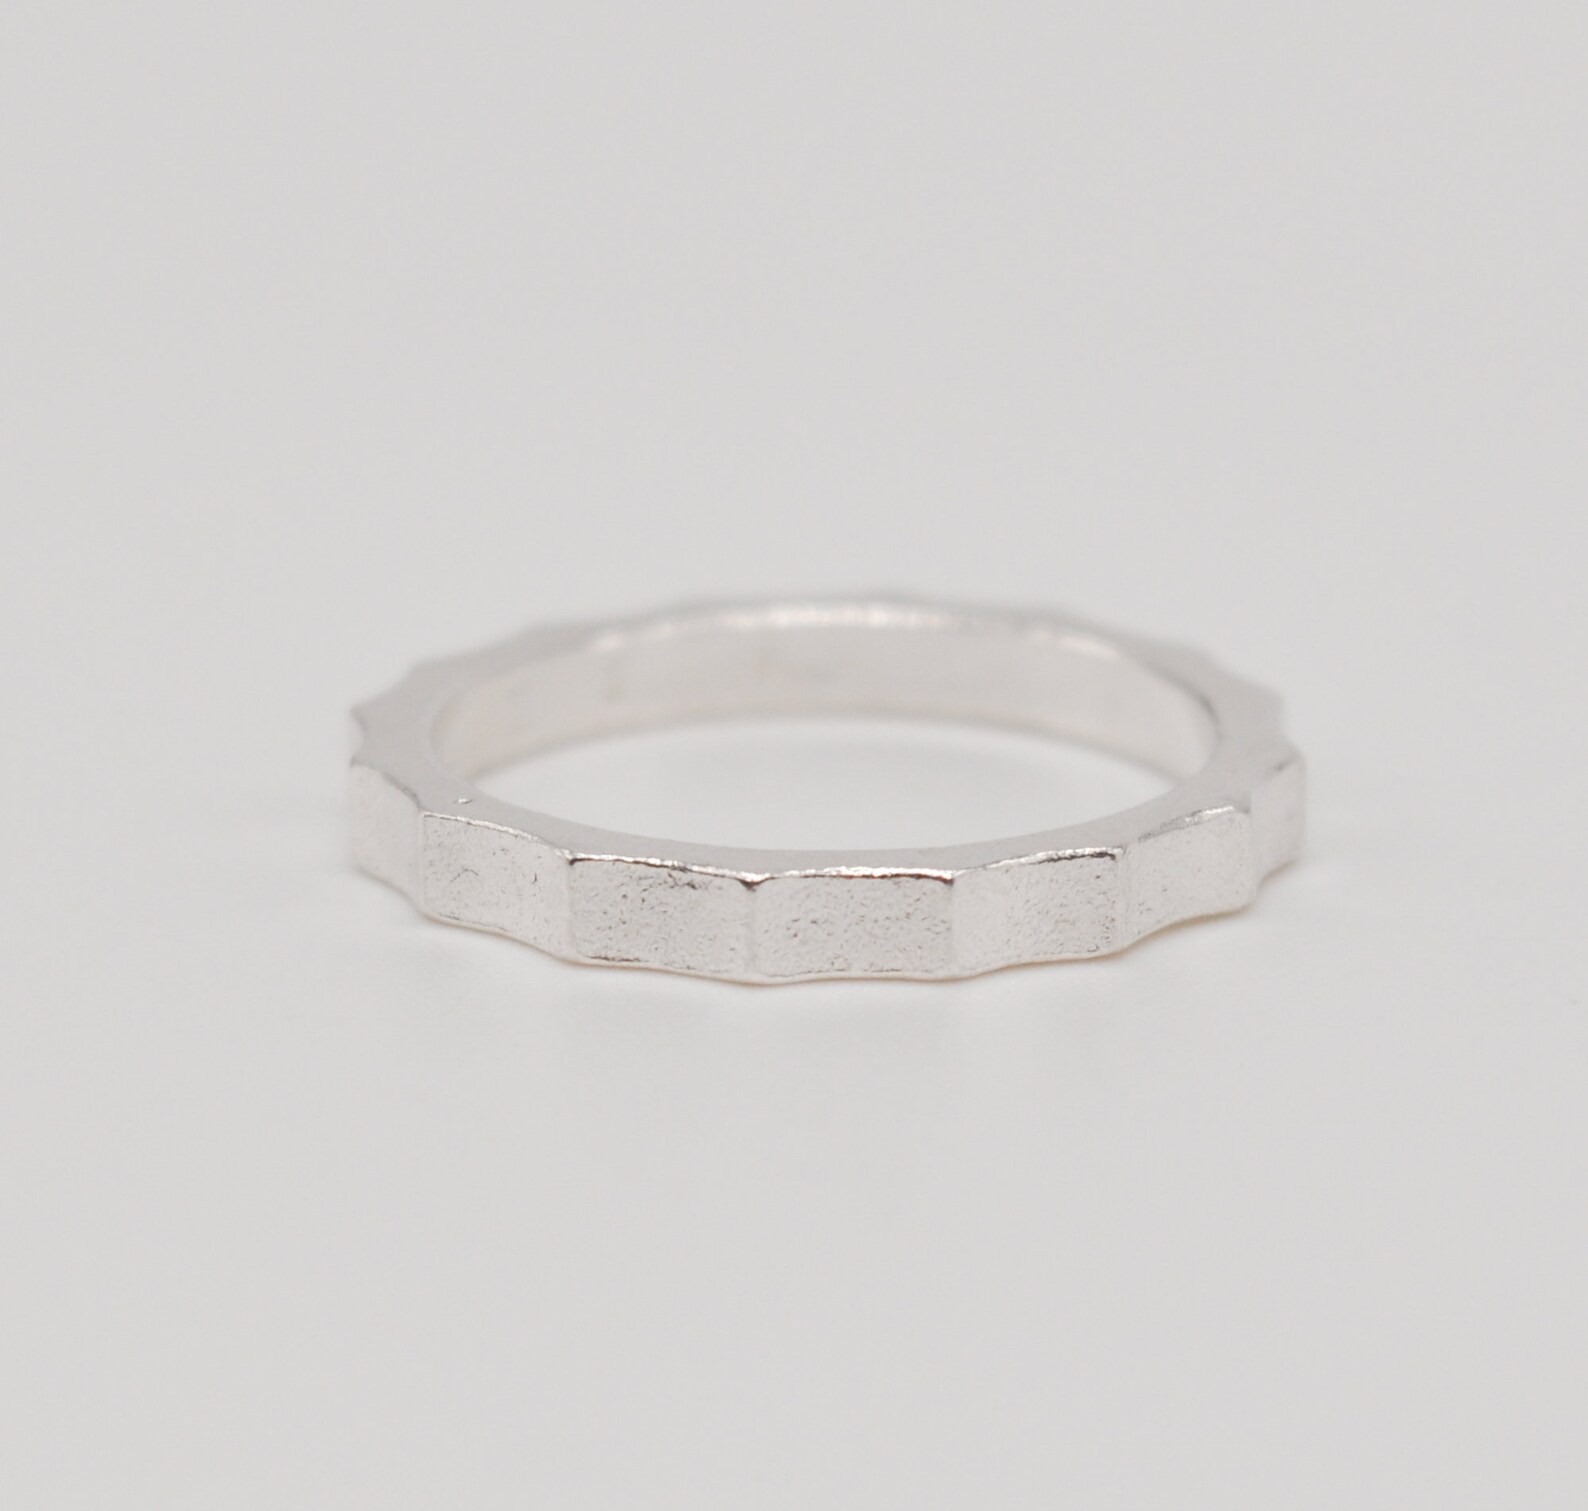 Vintage Swedish 925 Silver Ring. Size: 20 mm US 10. | Etsy